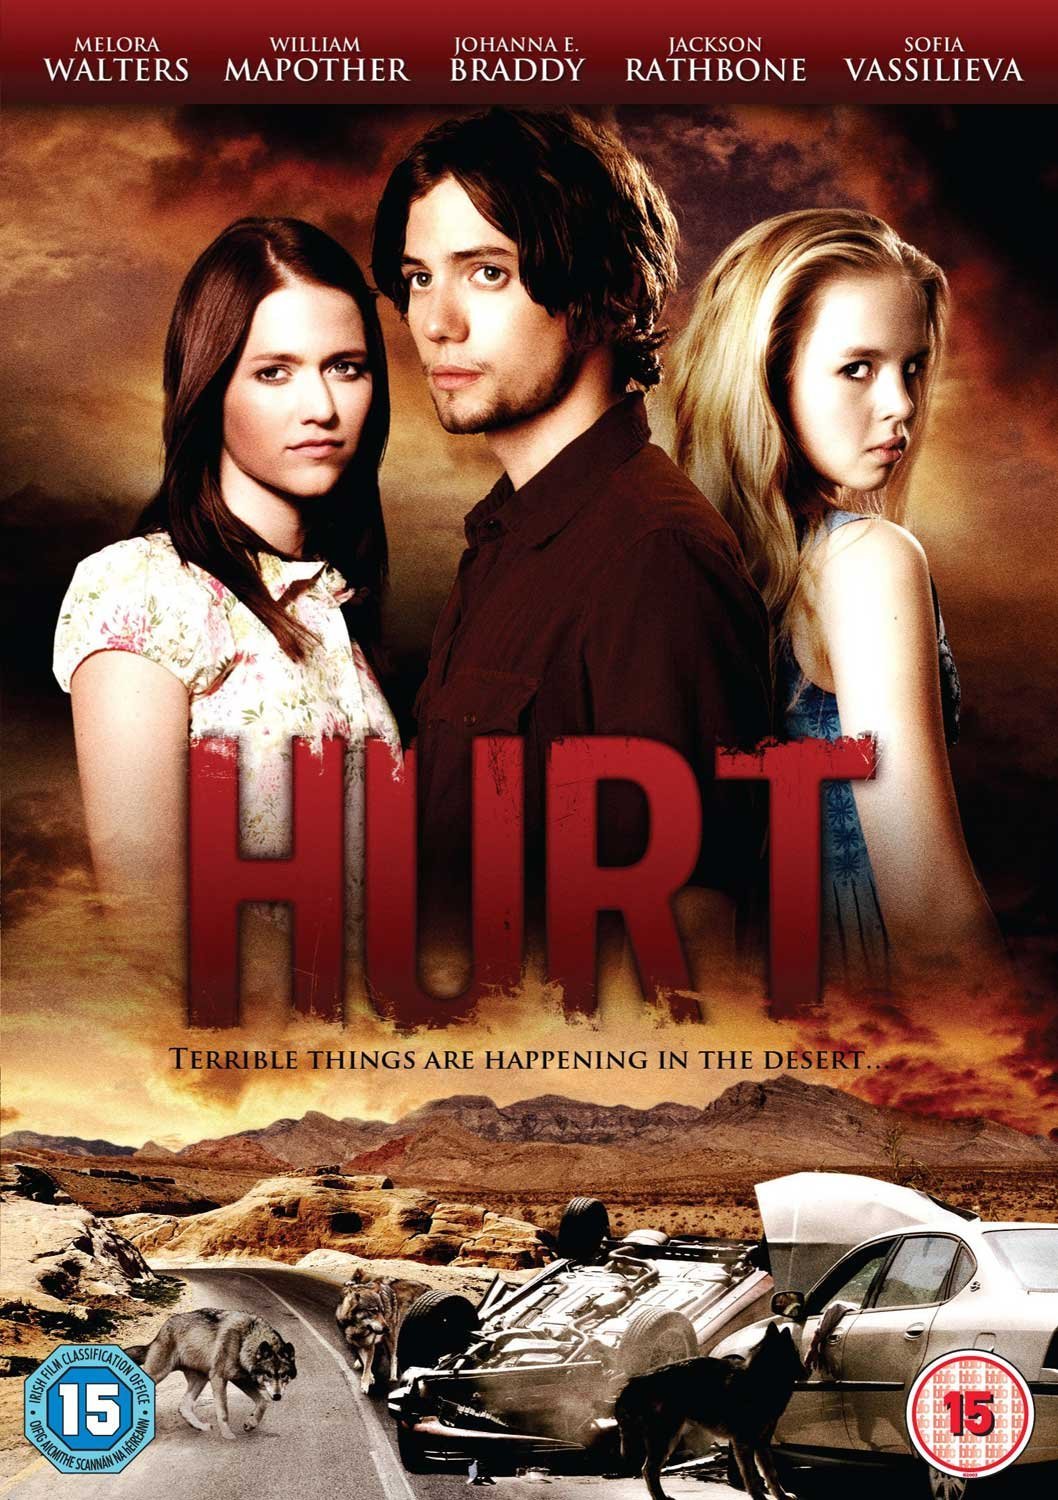 Hurt (DVD)